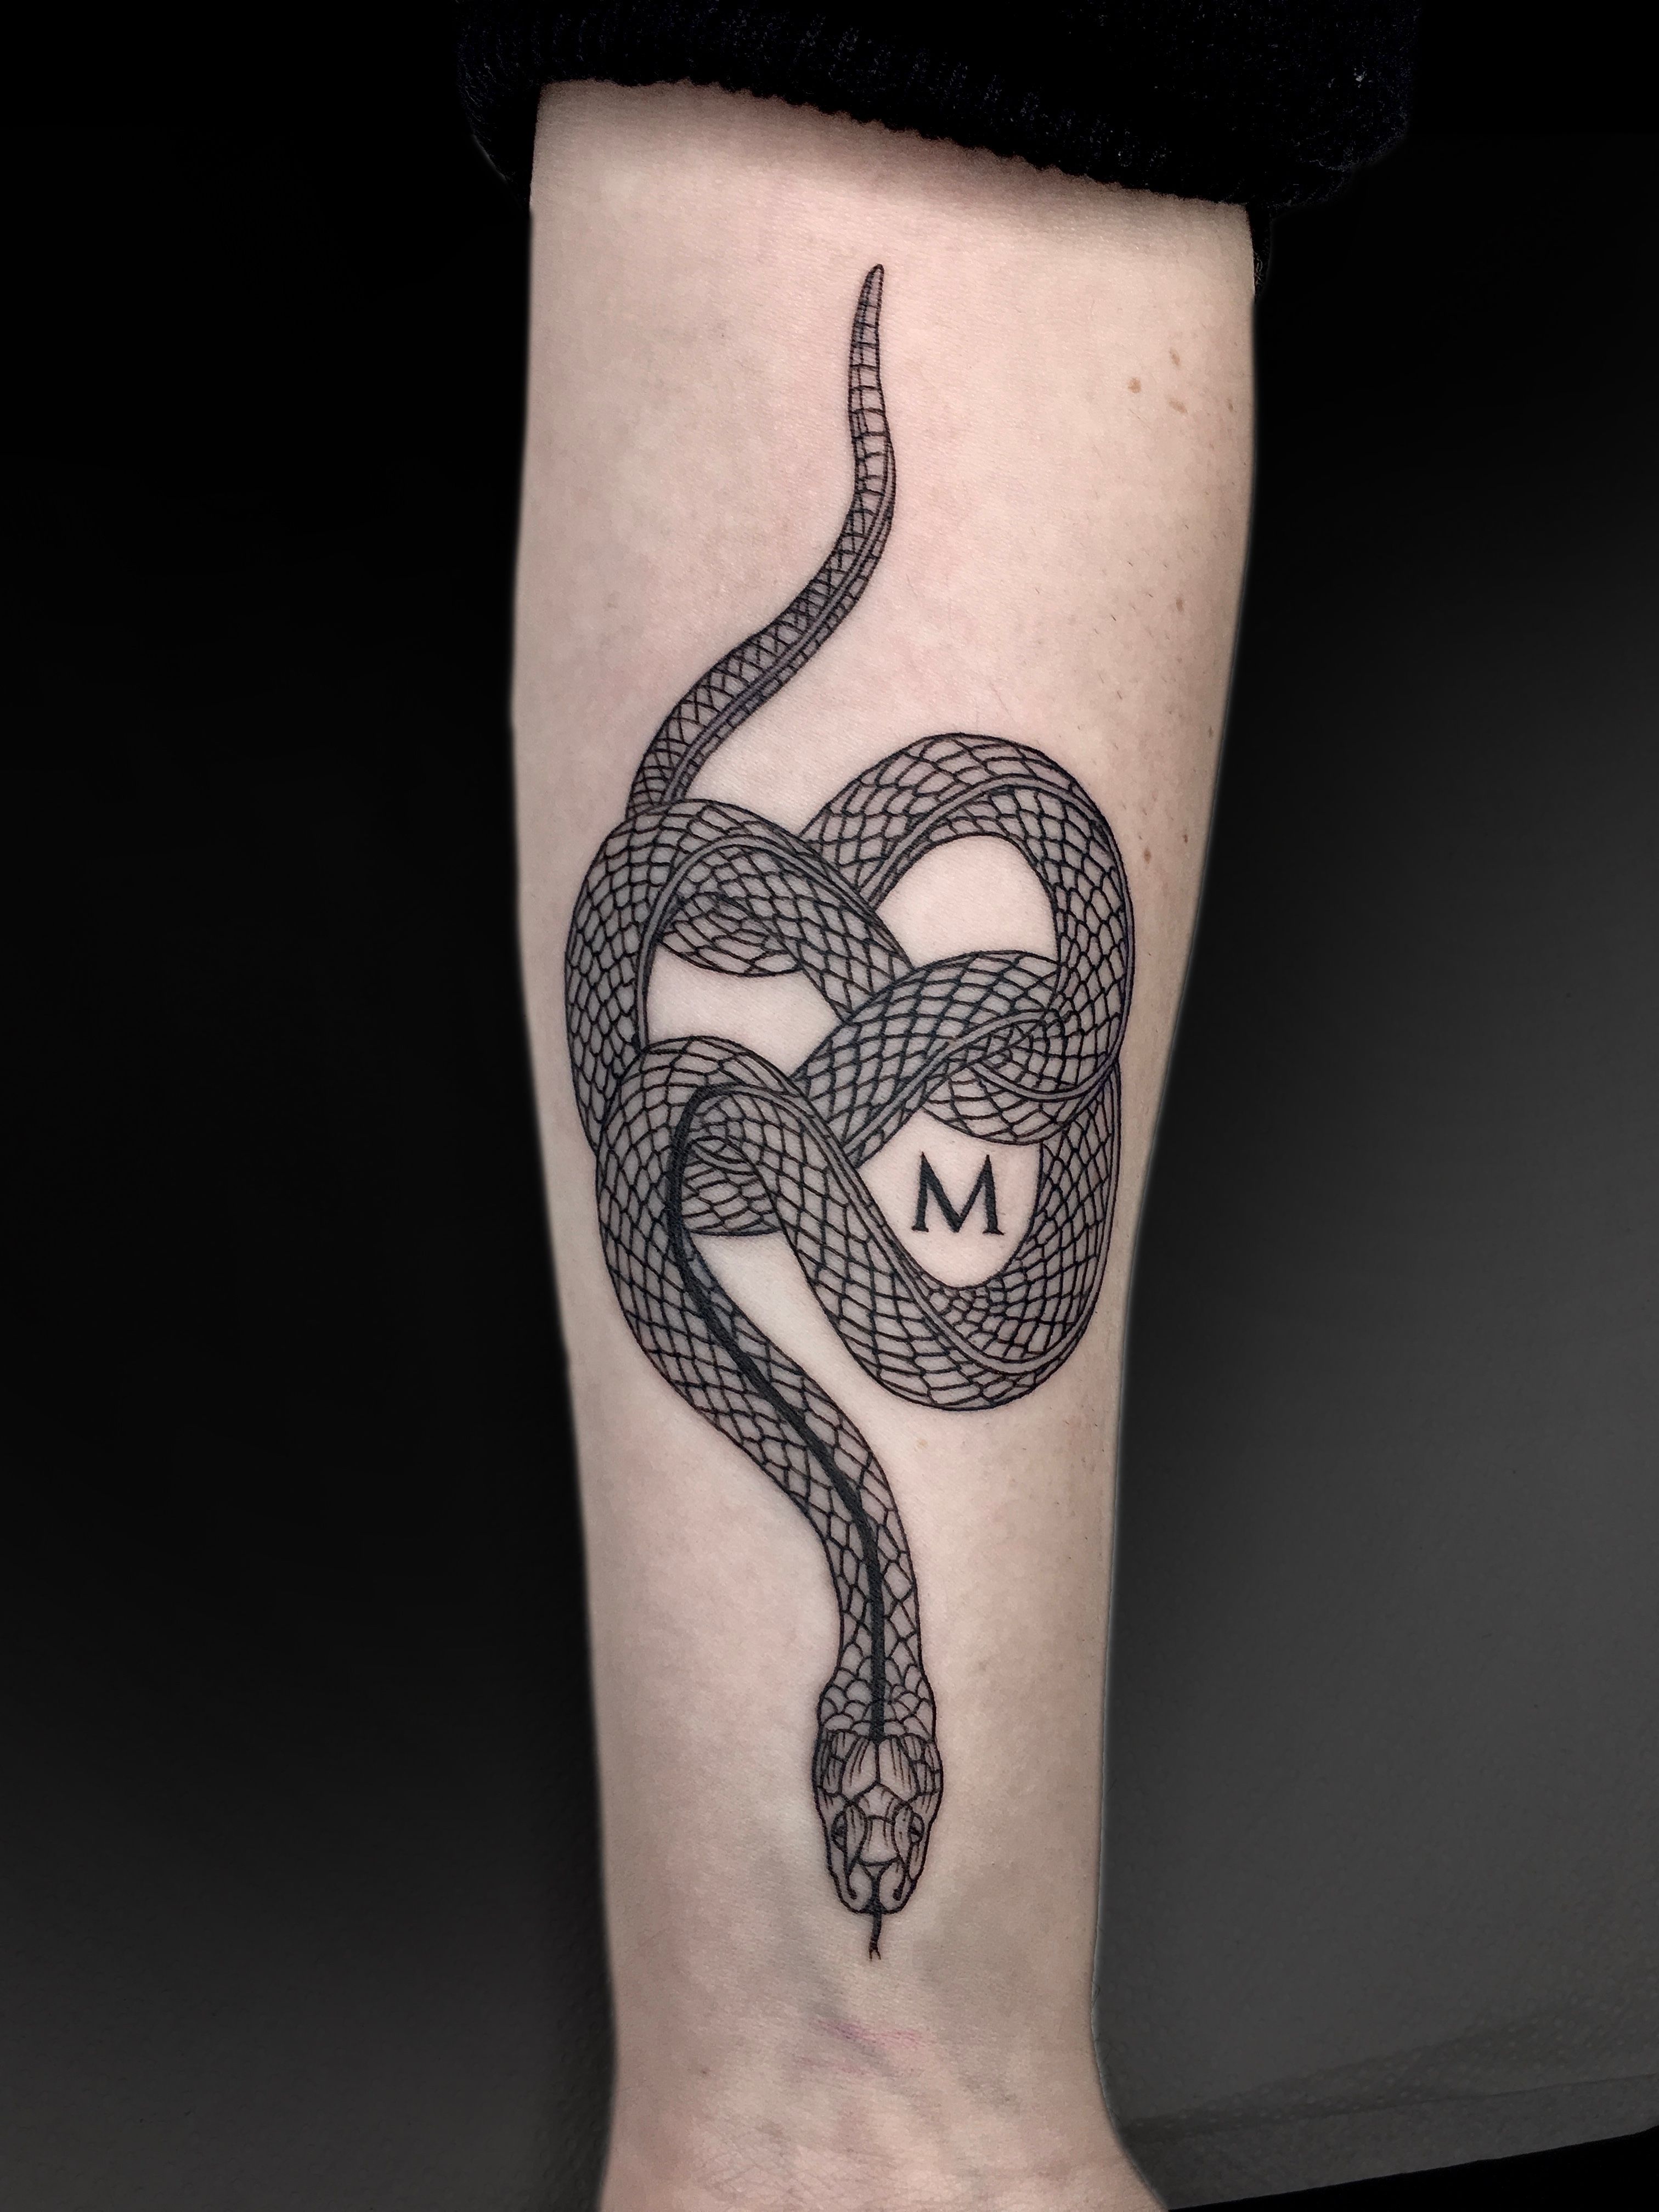 Python Snake Tattoo Lasting Fake Tattoos For Woman Men Hip Hop Punk Wrist  Arm Tattoos Waterproof Viper Temporary Tattoo Stickers  Temporary Tattoos   AliExpress